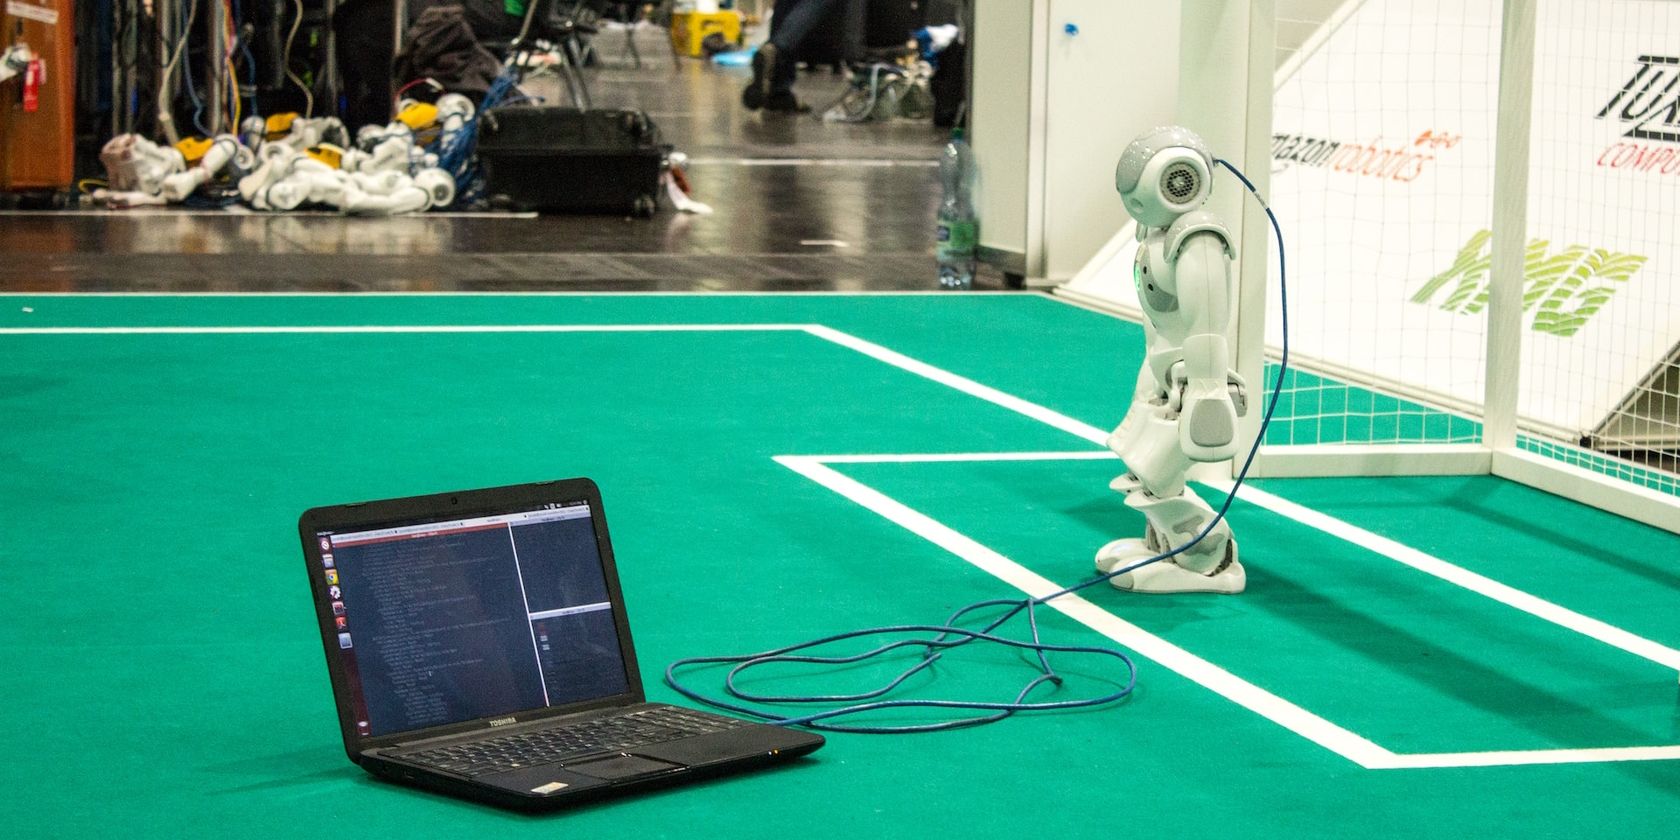 Programming a robot at Robocup using a laptop